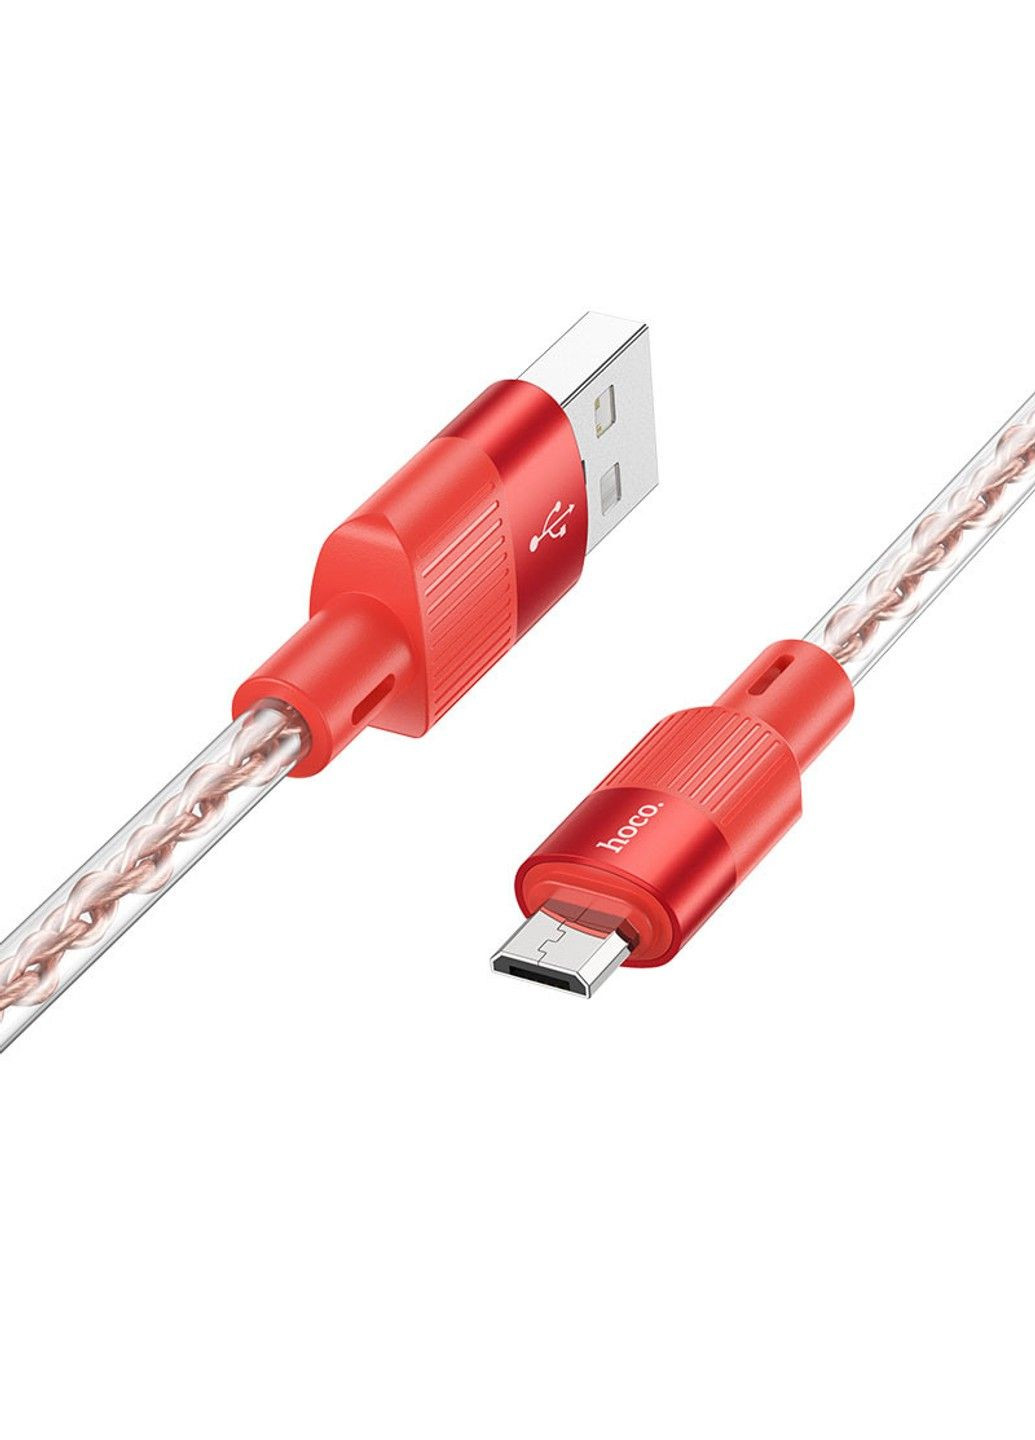 Дата кабель X99 Crystal Junction USB to MicroUSB (1.2m) Hoco (291880934)